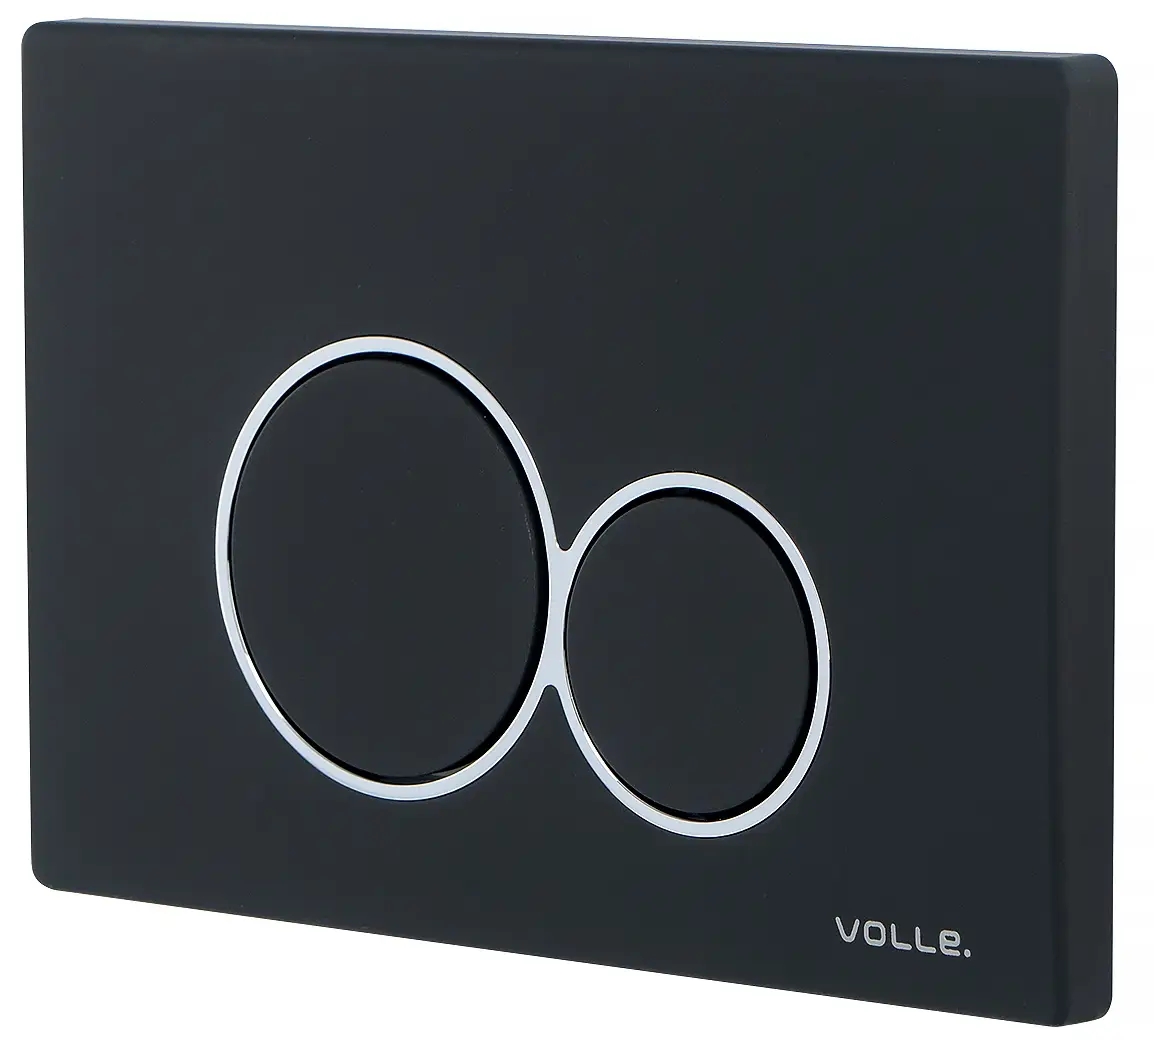 Панель змиву для інсталяції Volle Viso Evo 222123 ціна 1385 грн - фотографія 2